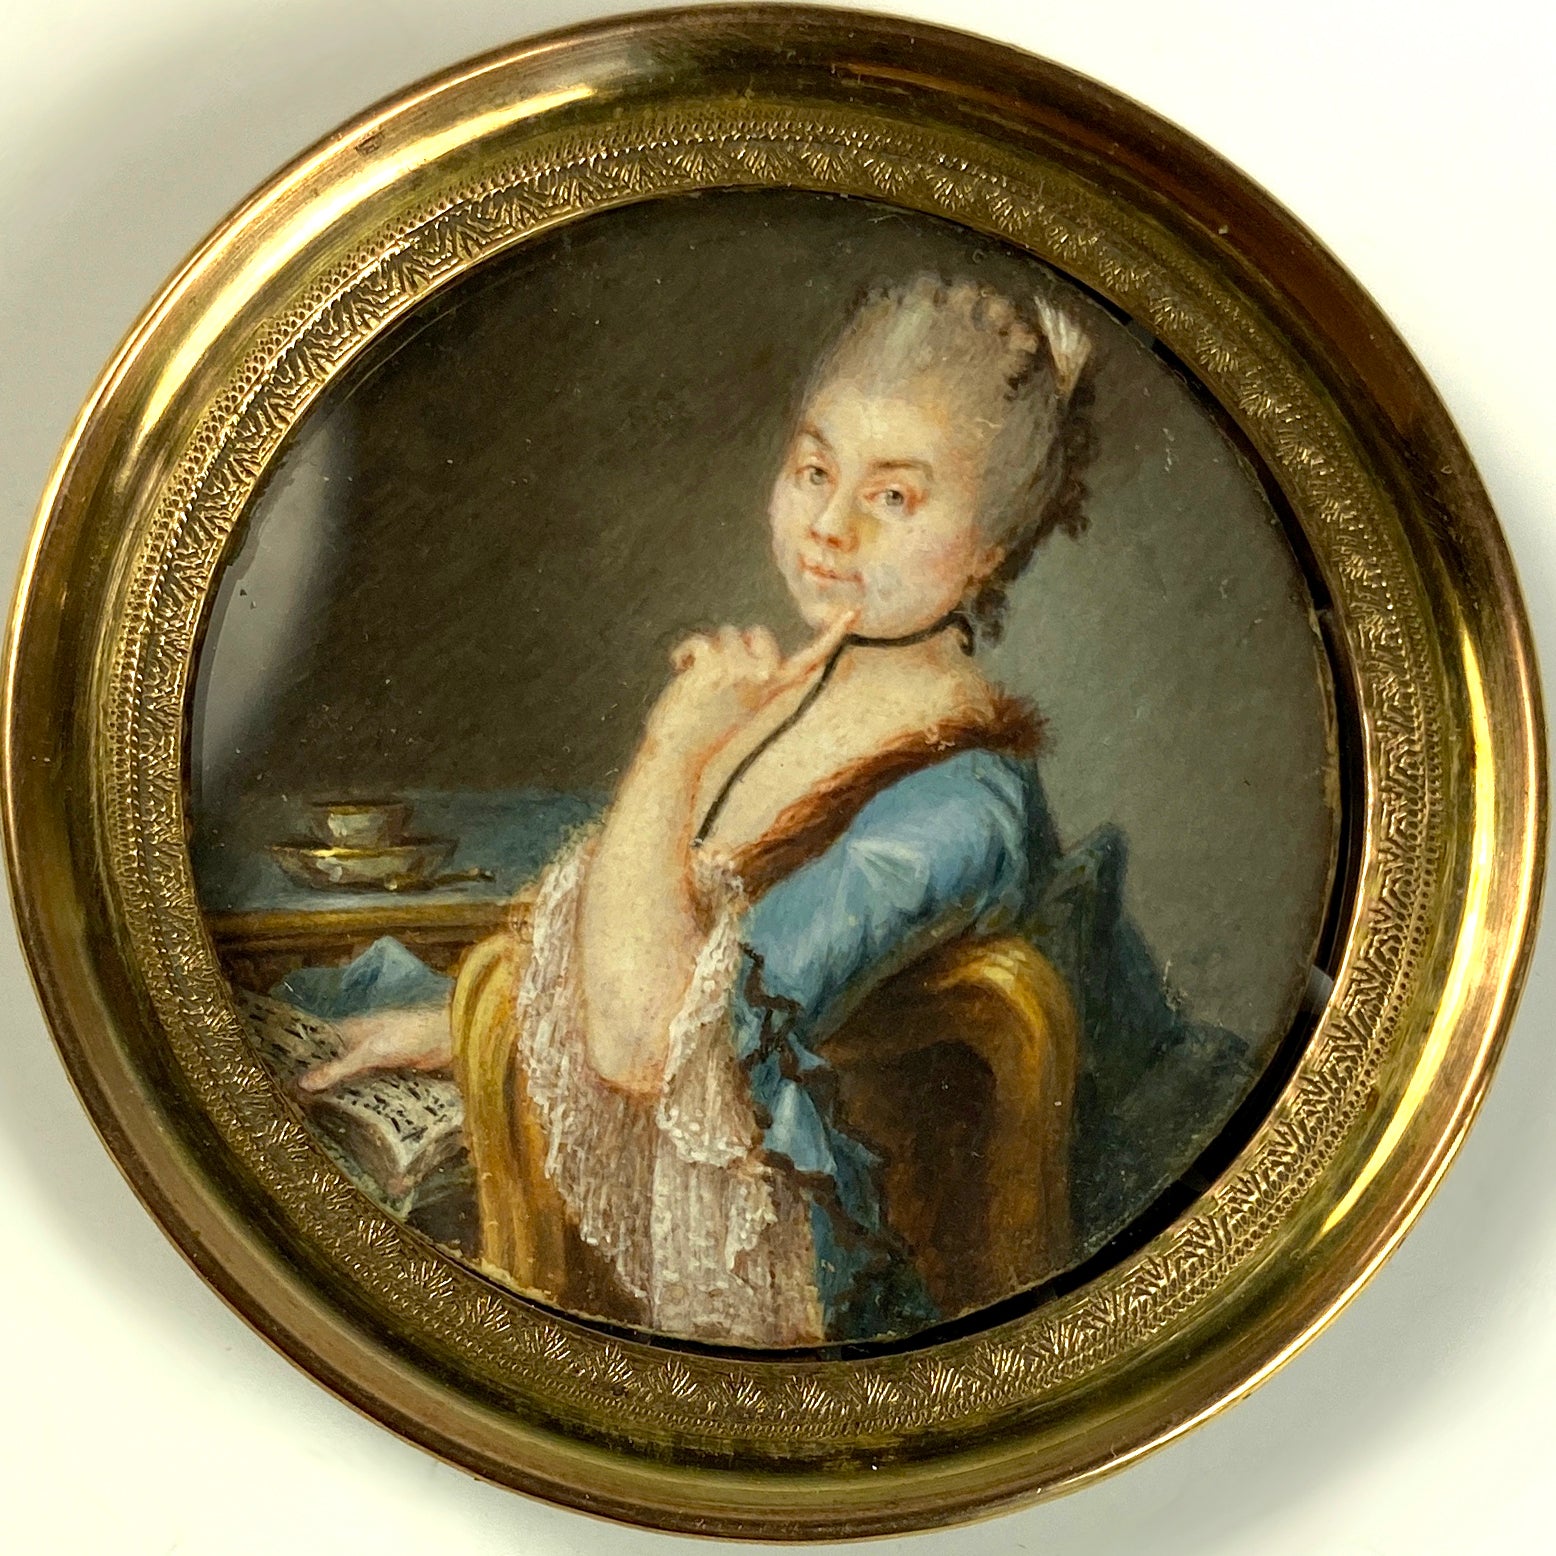 Antique c.1750s French Portrait Miniature of a Woman with Sevres Teacup, Music Score